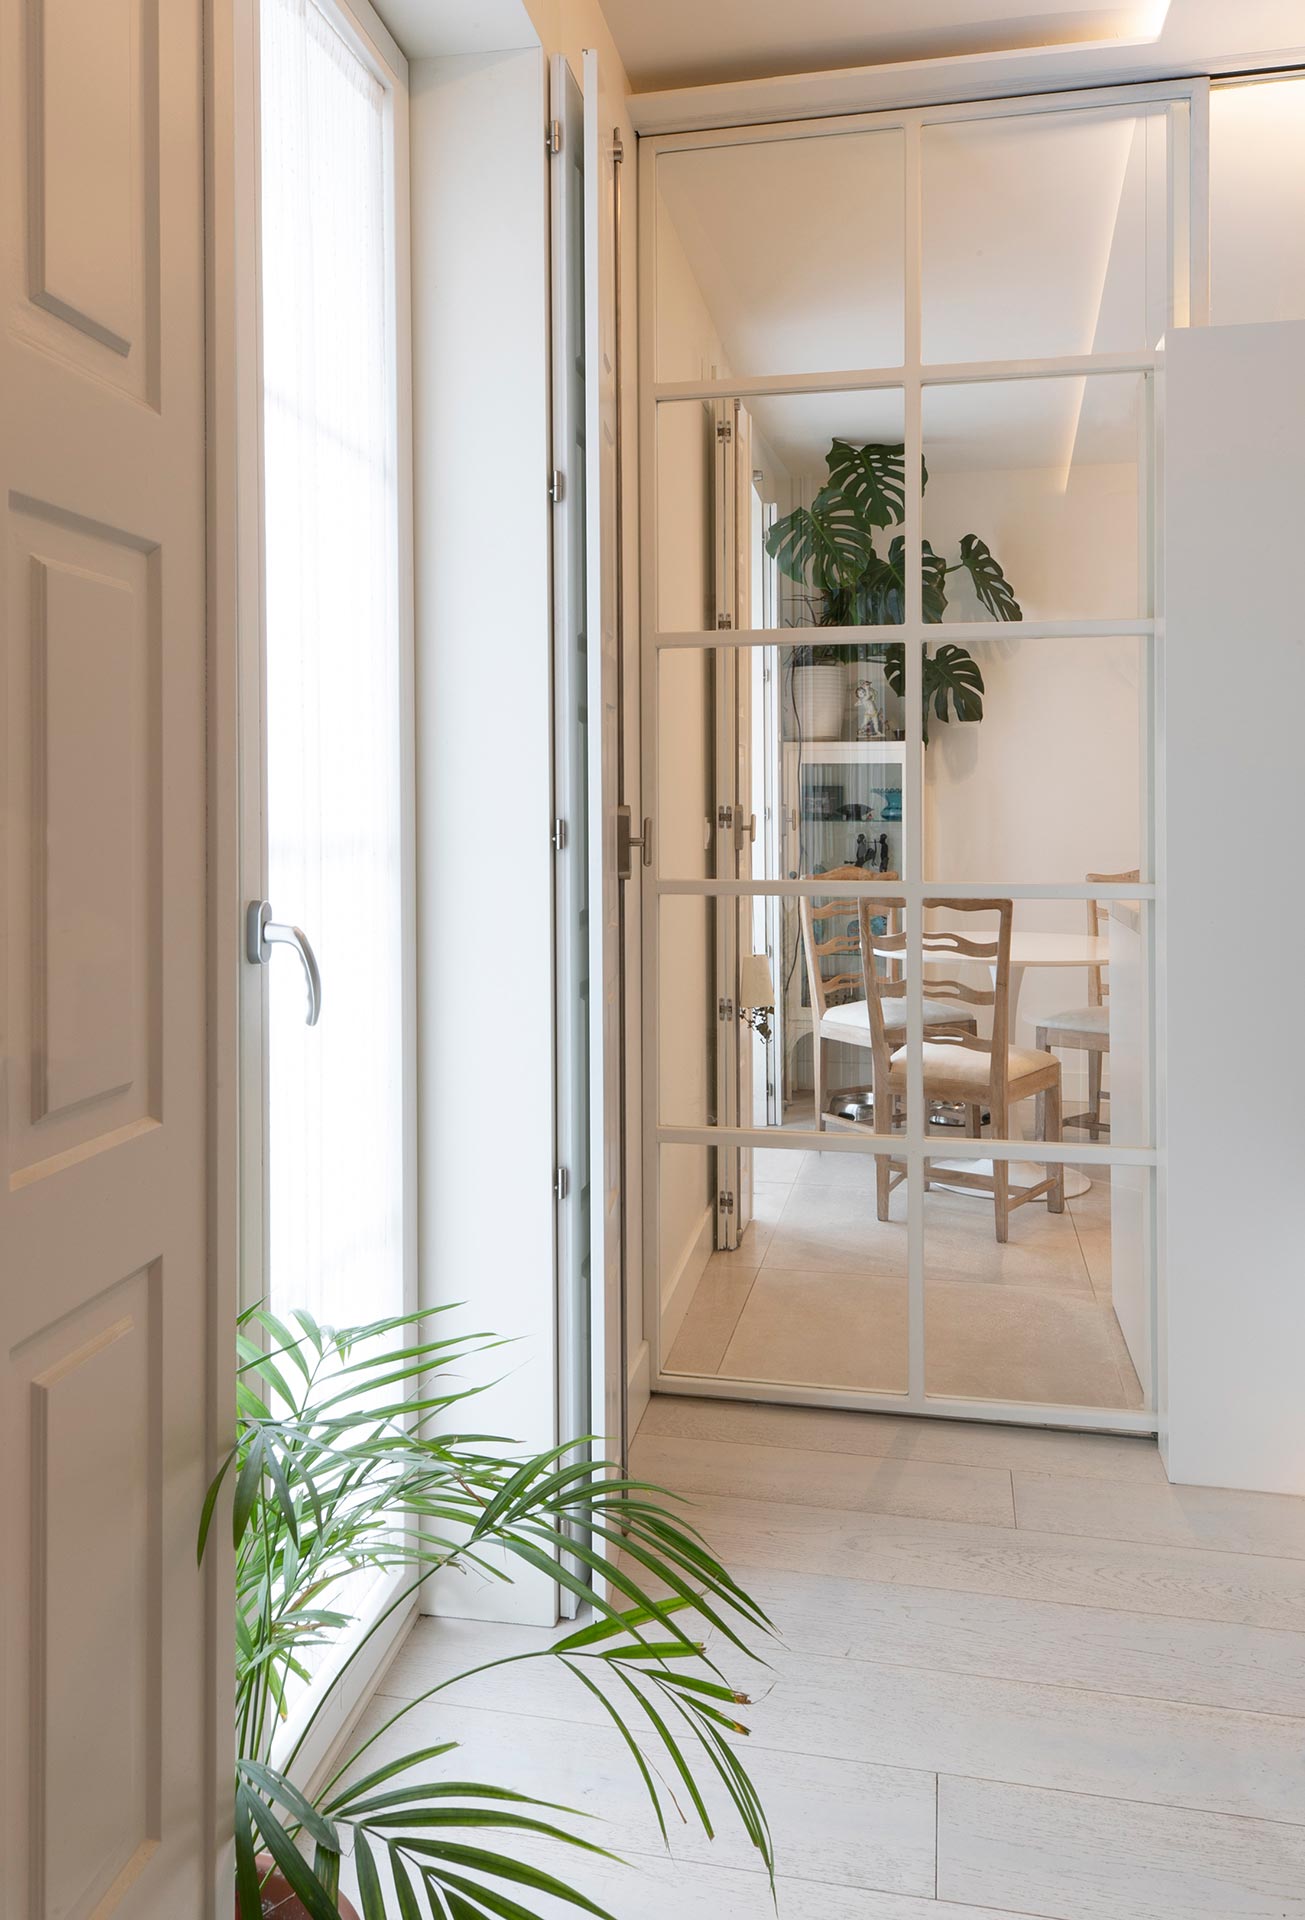 Glass door in modern refurbishment of apartment designed by Moah Arquitectos in Santander